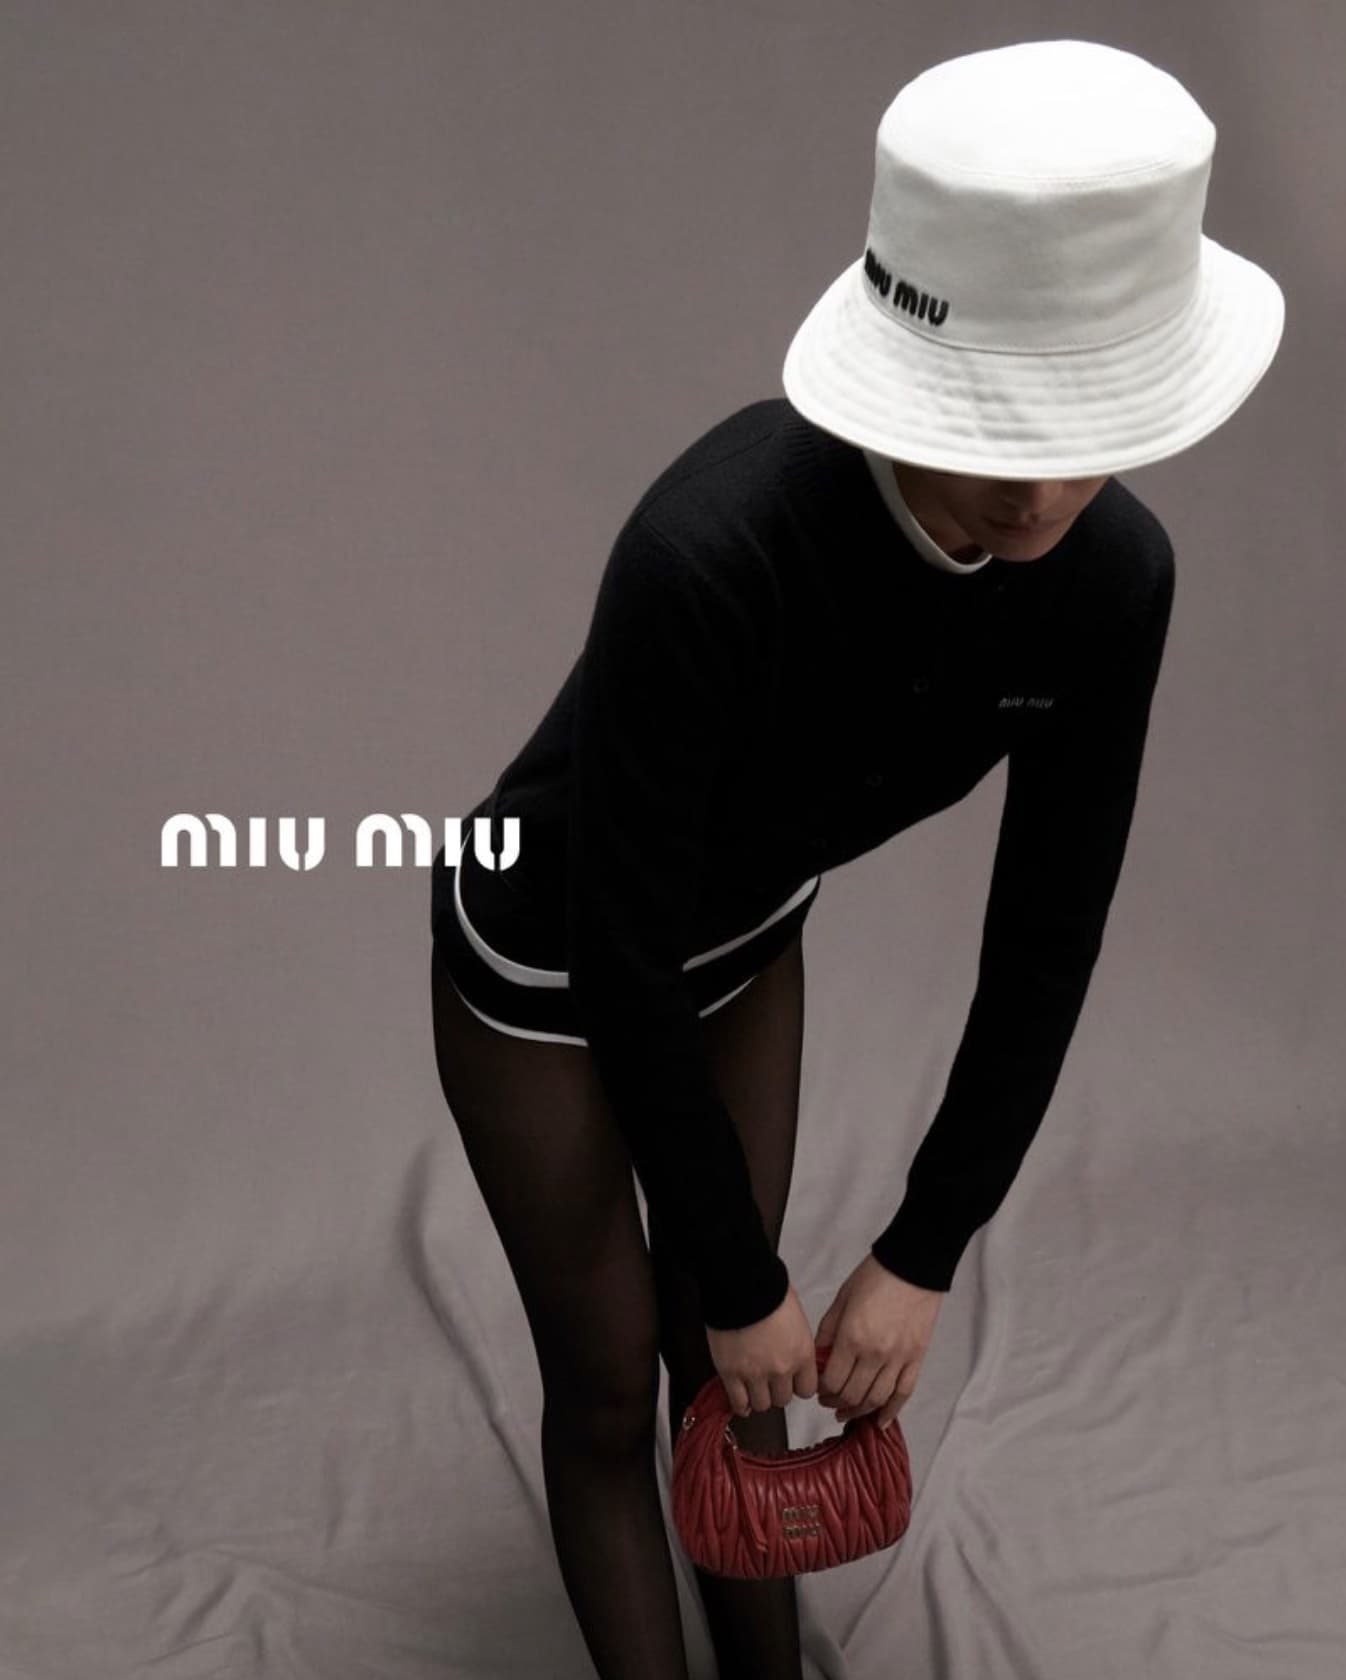 Ruiqi Jiang & Ying Ouyang by Lengua for Miu Miu Qixi 2023 Ad Campaign -  Fashion Campaigns - Minimal. / Visual.